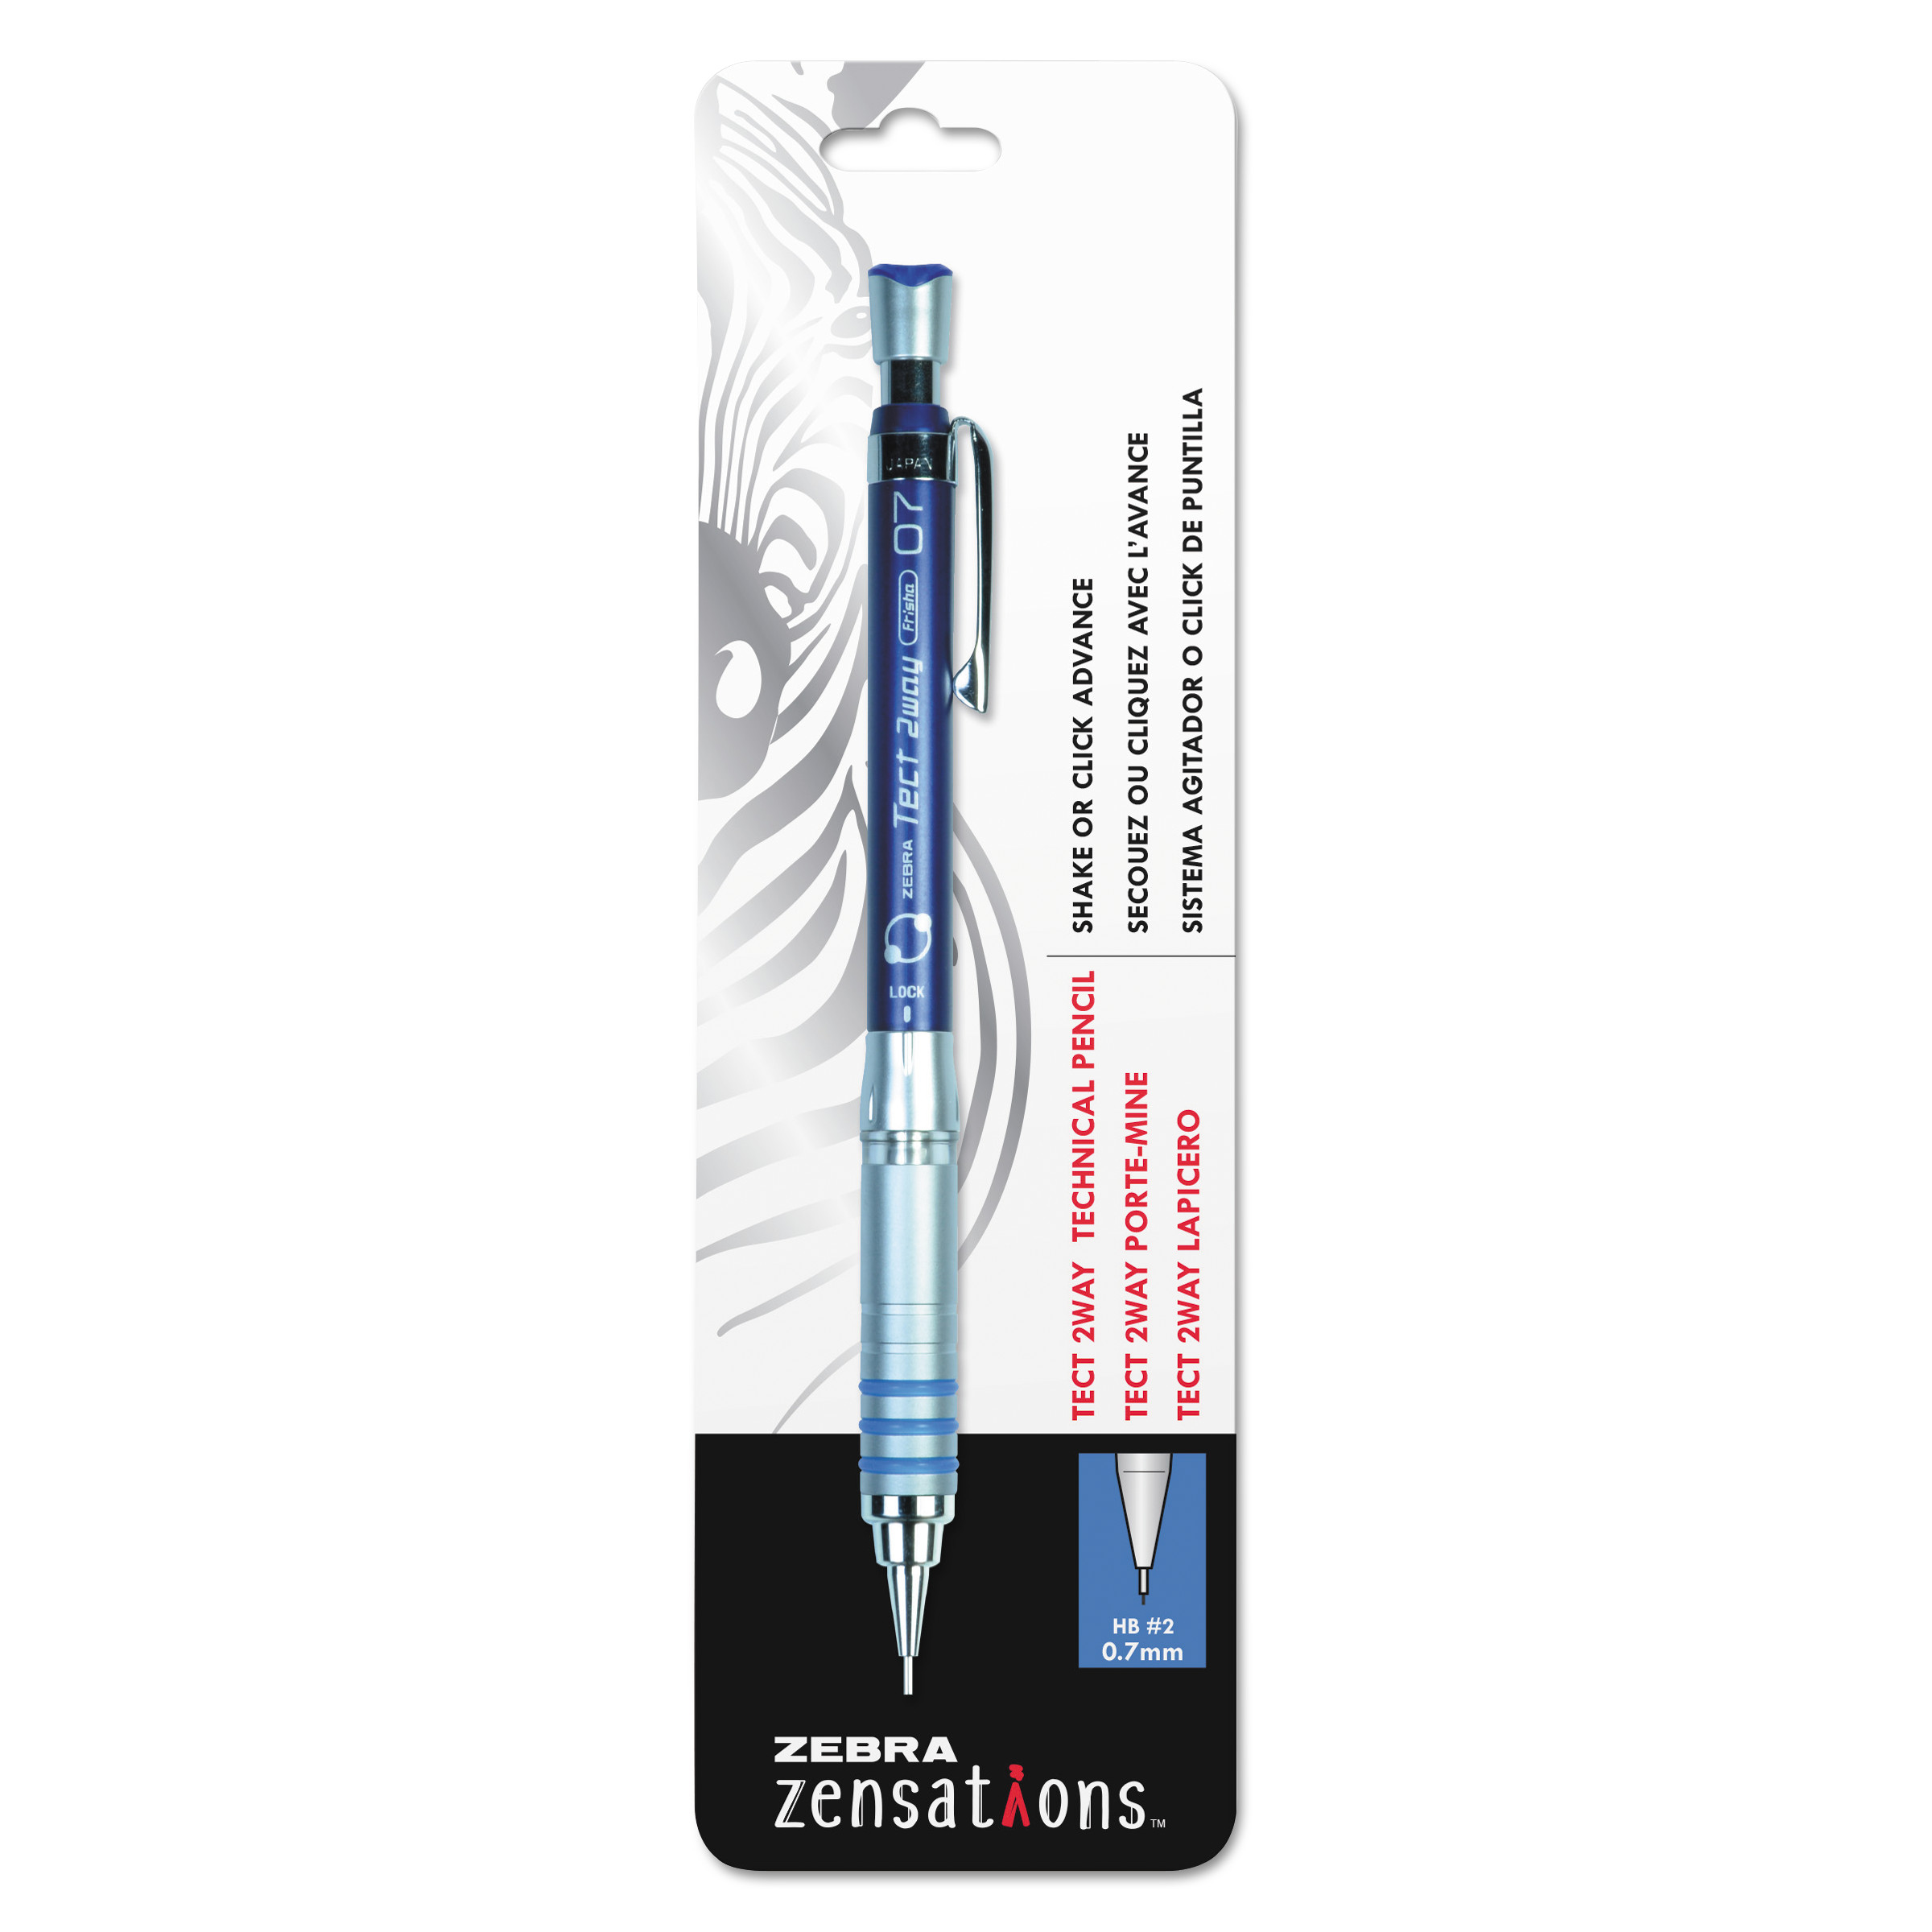  Zebra 06211 Zensations Tect 2way 1000 Technical Pencil, 0.7 mm, HB (#2), Black Lead, Blue Barrel (ZEB06211) 